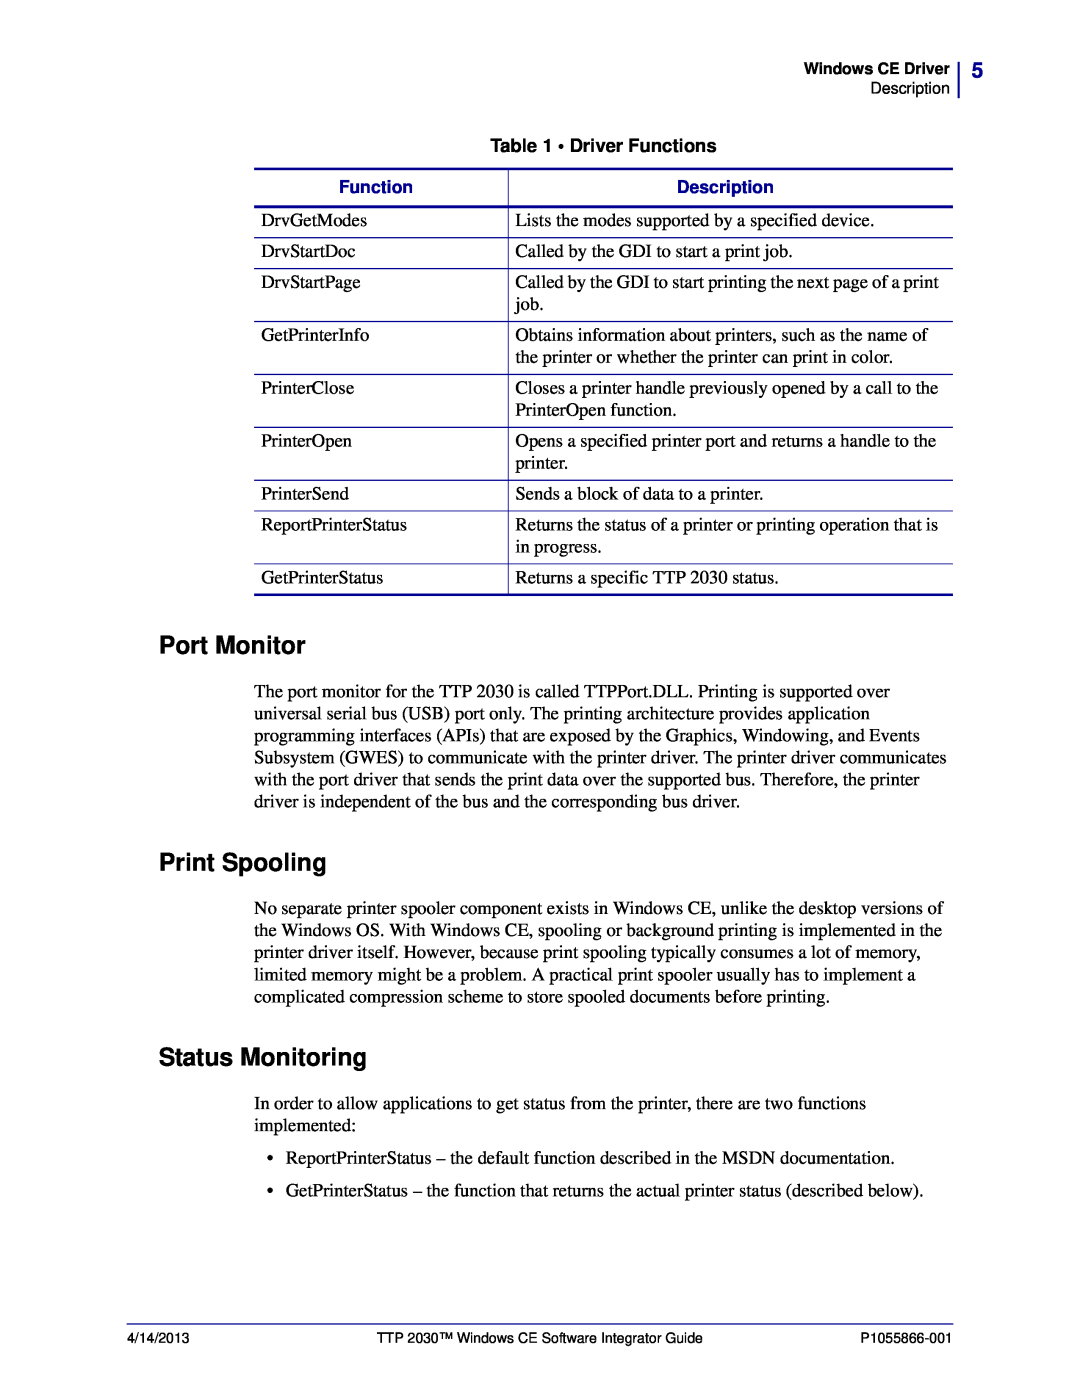 Zebra Technologies TTP 2030 manual Port Monitor, Print Spooling, Status Monitoring 